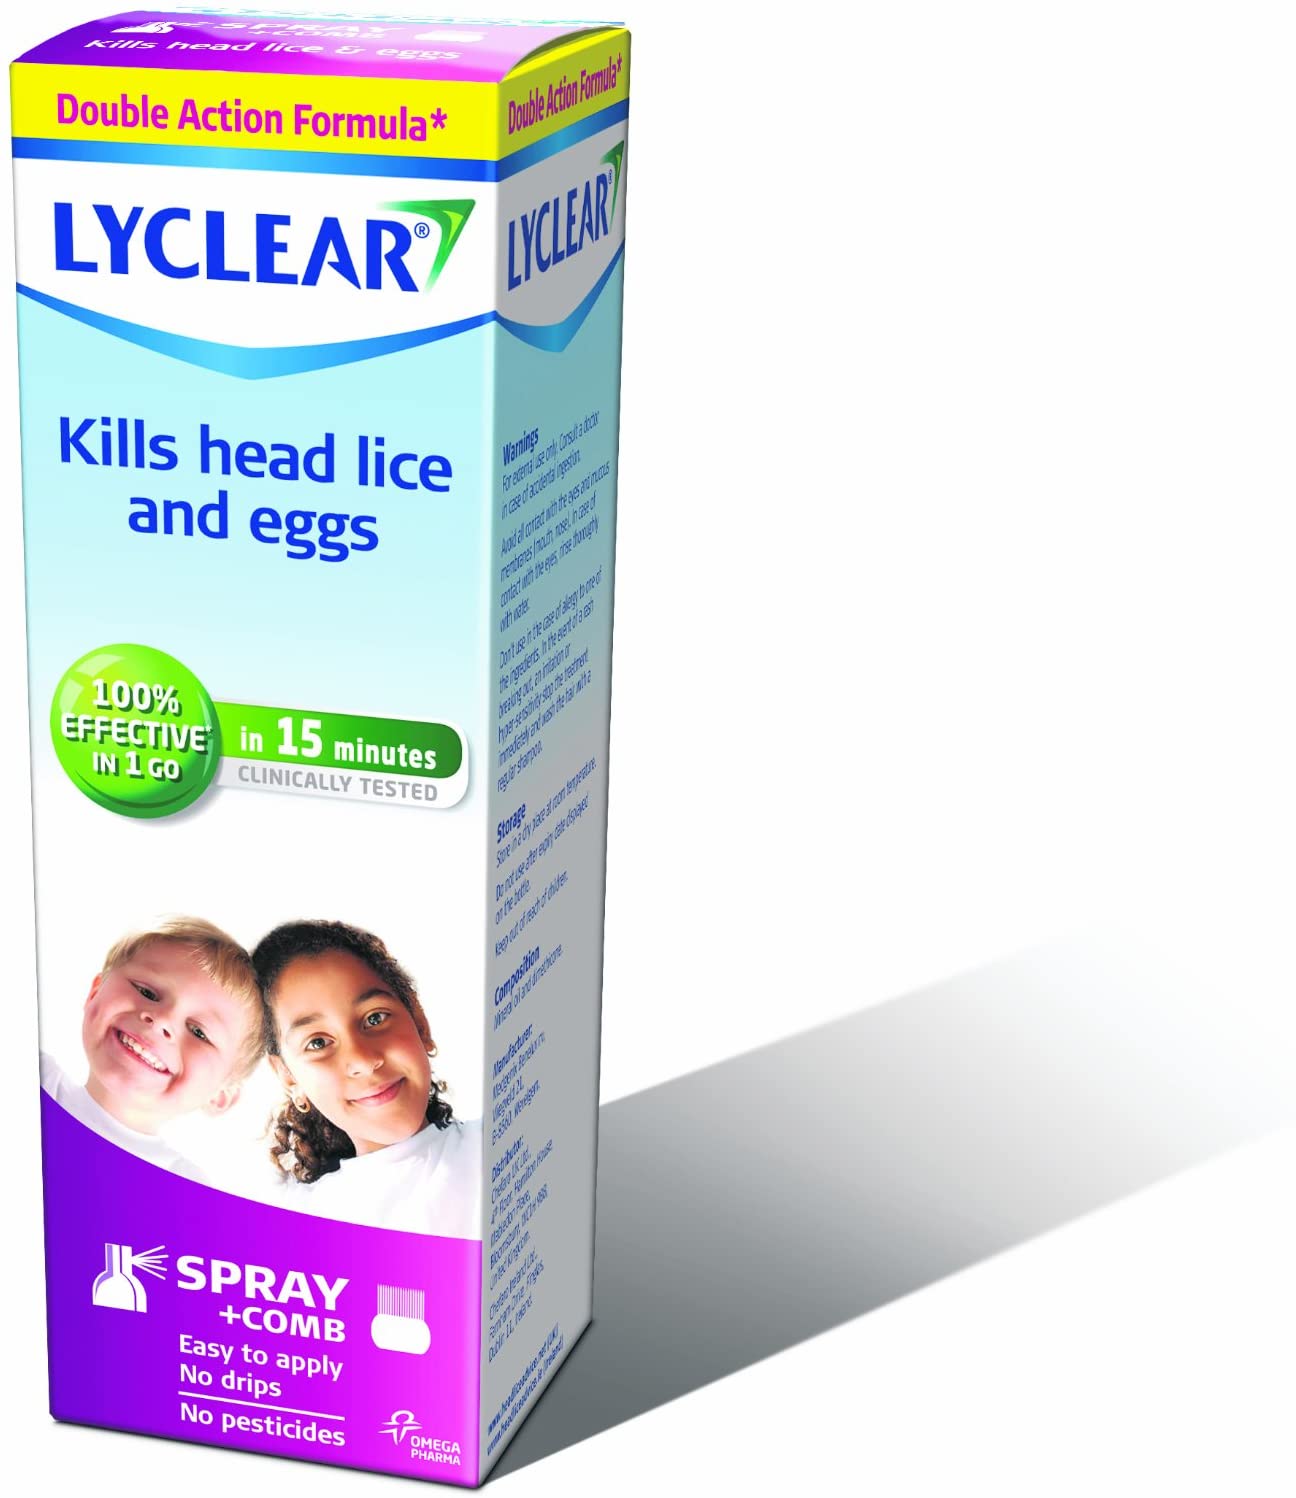 Lyclear Spray